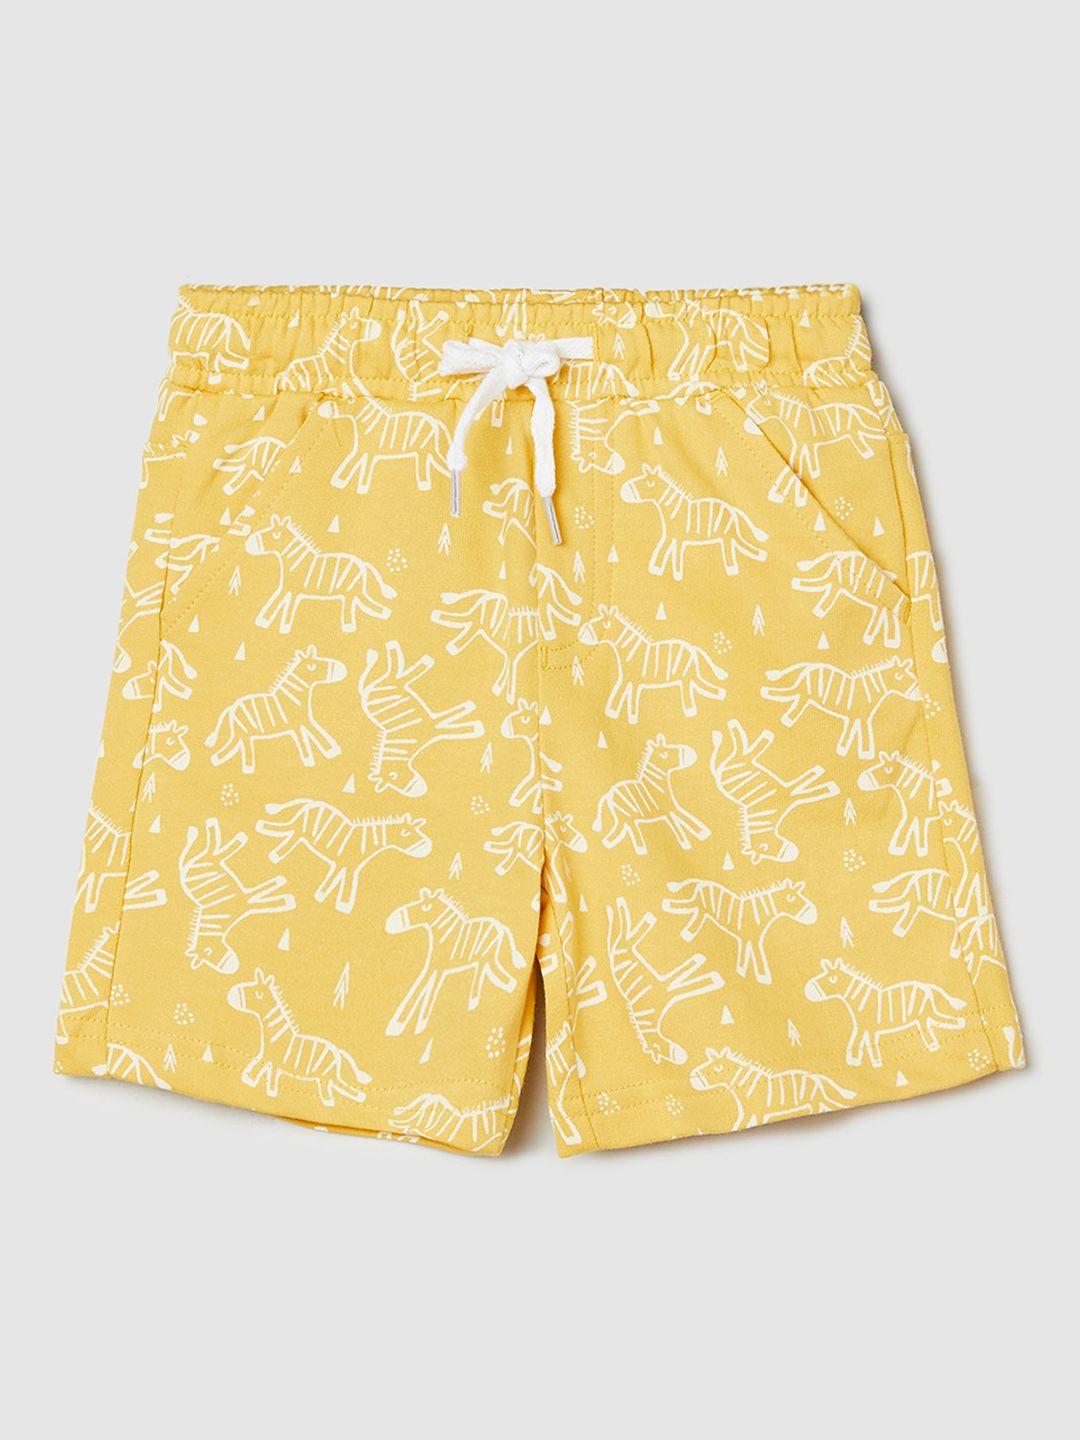 max boys conversational printed pure cotton rapid dry regular shorts